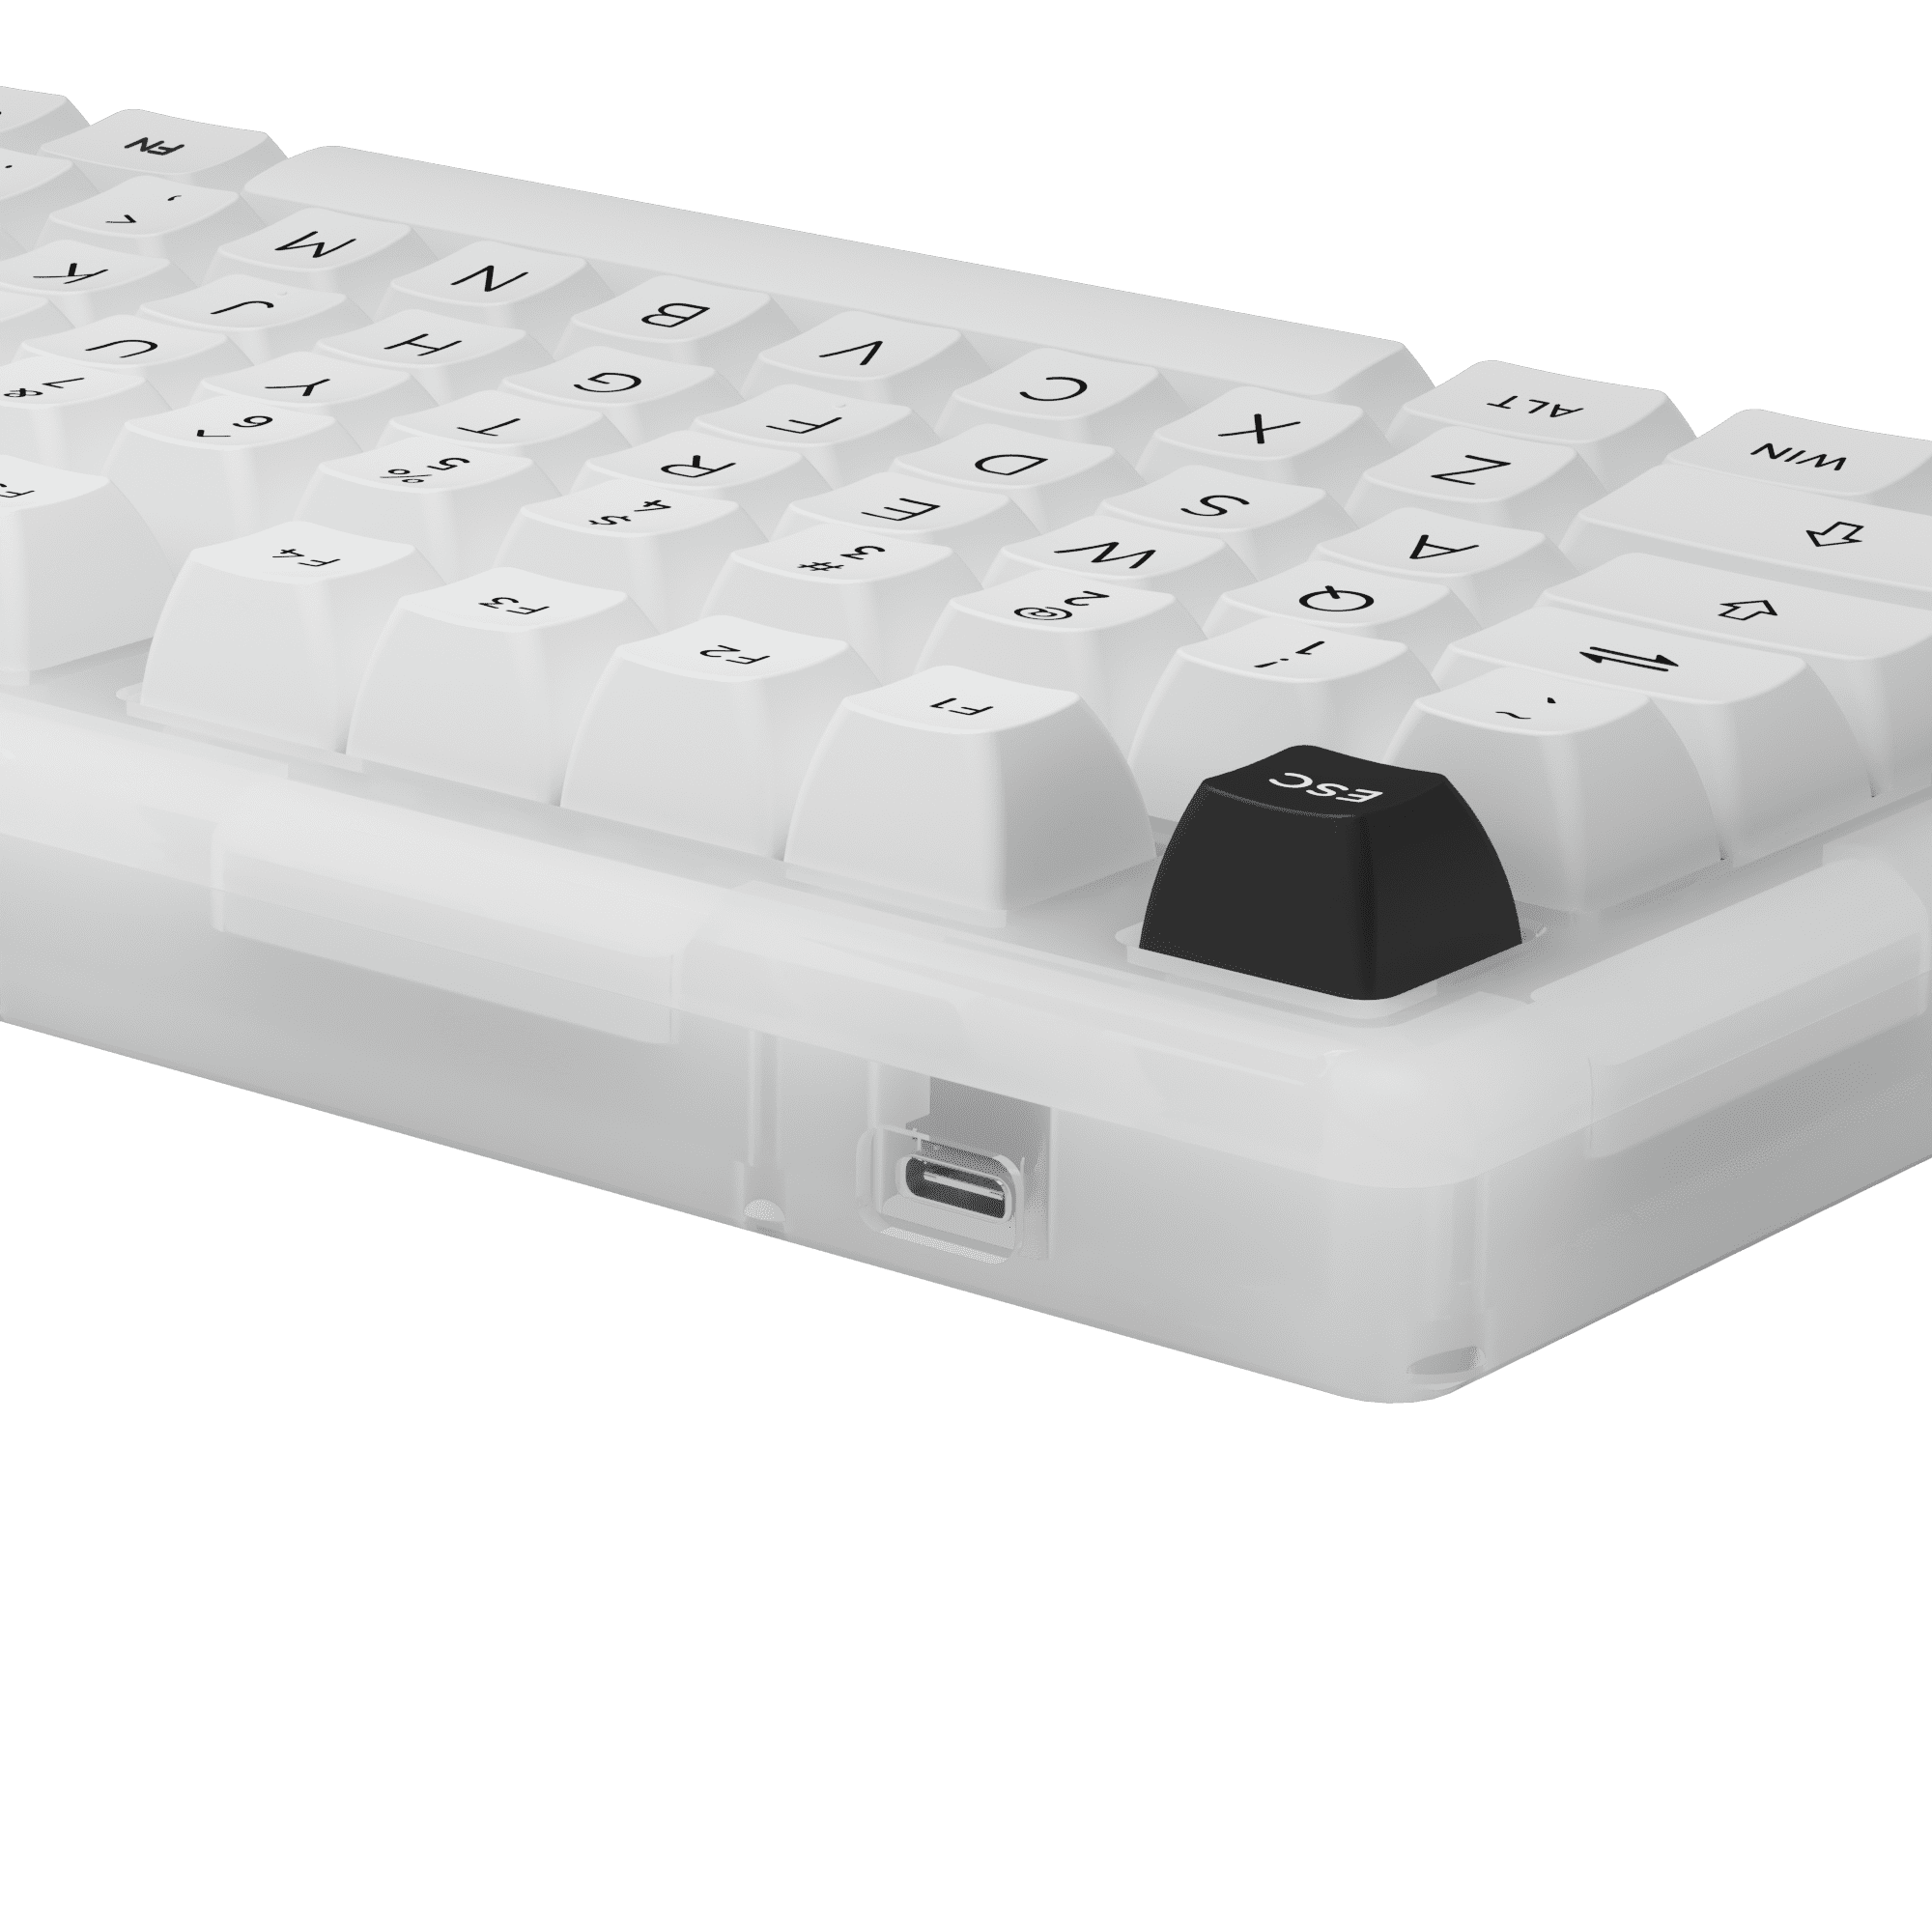 AKKO ACR75 PRO 81 Keys Gasket Mount Hot Swappable Wired Mechanical Keyboard Aluminum/PC Plate Poron/EVA Foam Acrylic CNC Case